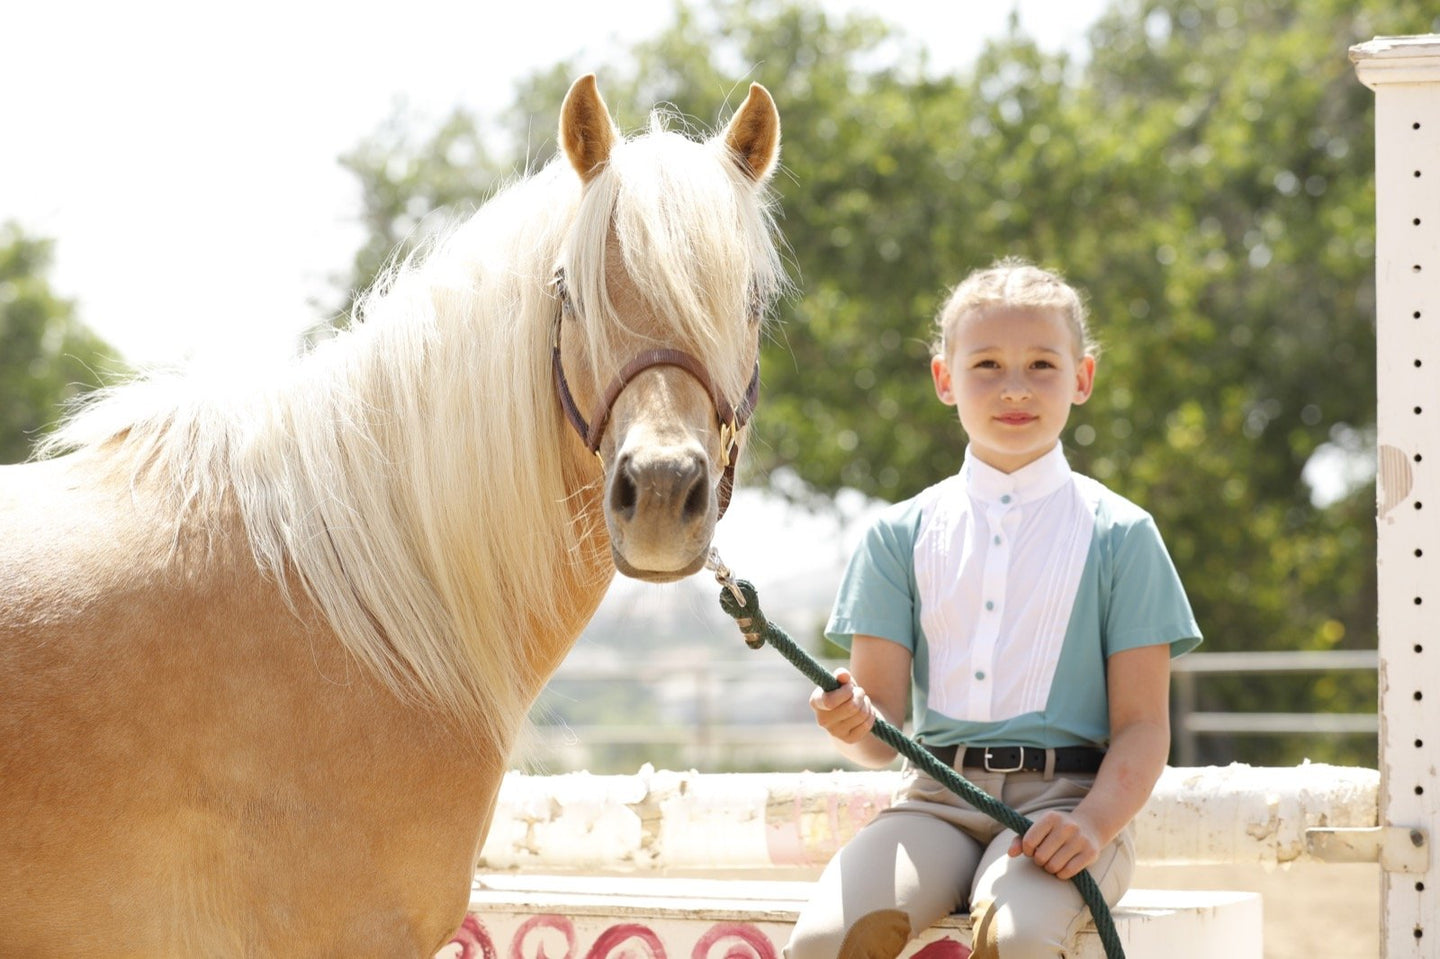 Kids equestrian riding show shirt from Cavalleria Toscana holding pony.